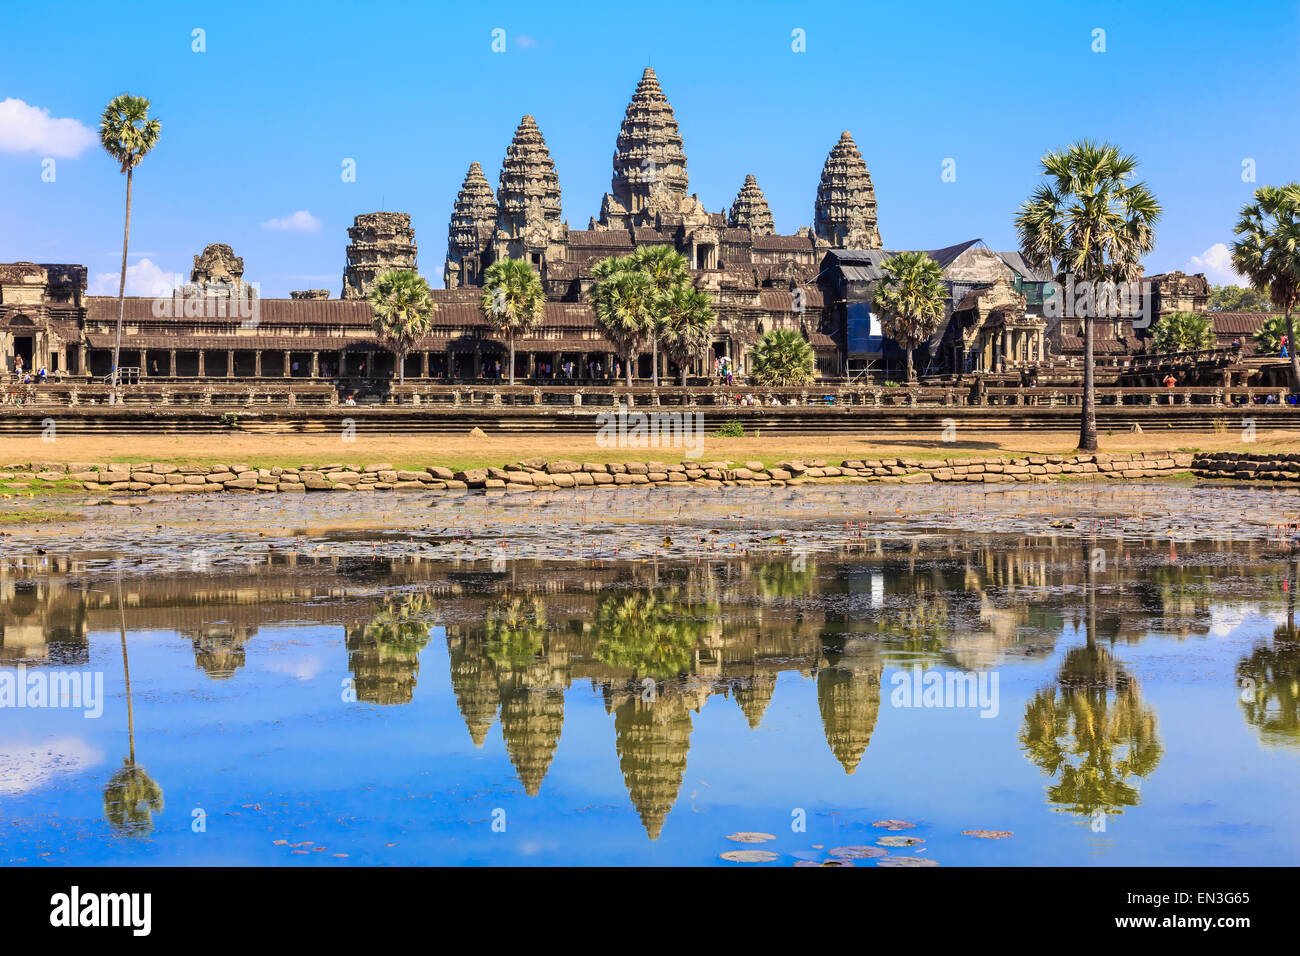 Antike Tempel Angkor Wat aus über den See. Das größte religiöse Bauwerk der Welt. Siem Reap, Kambodscha Stockfoto